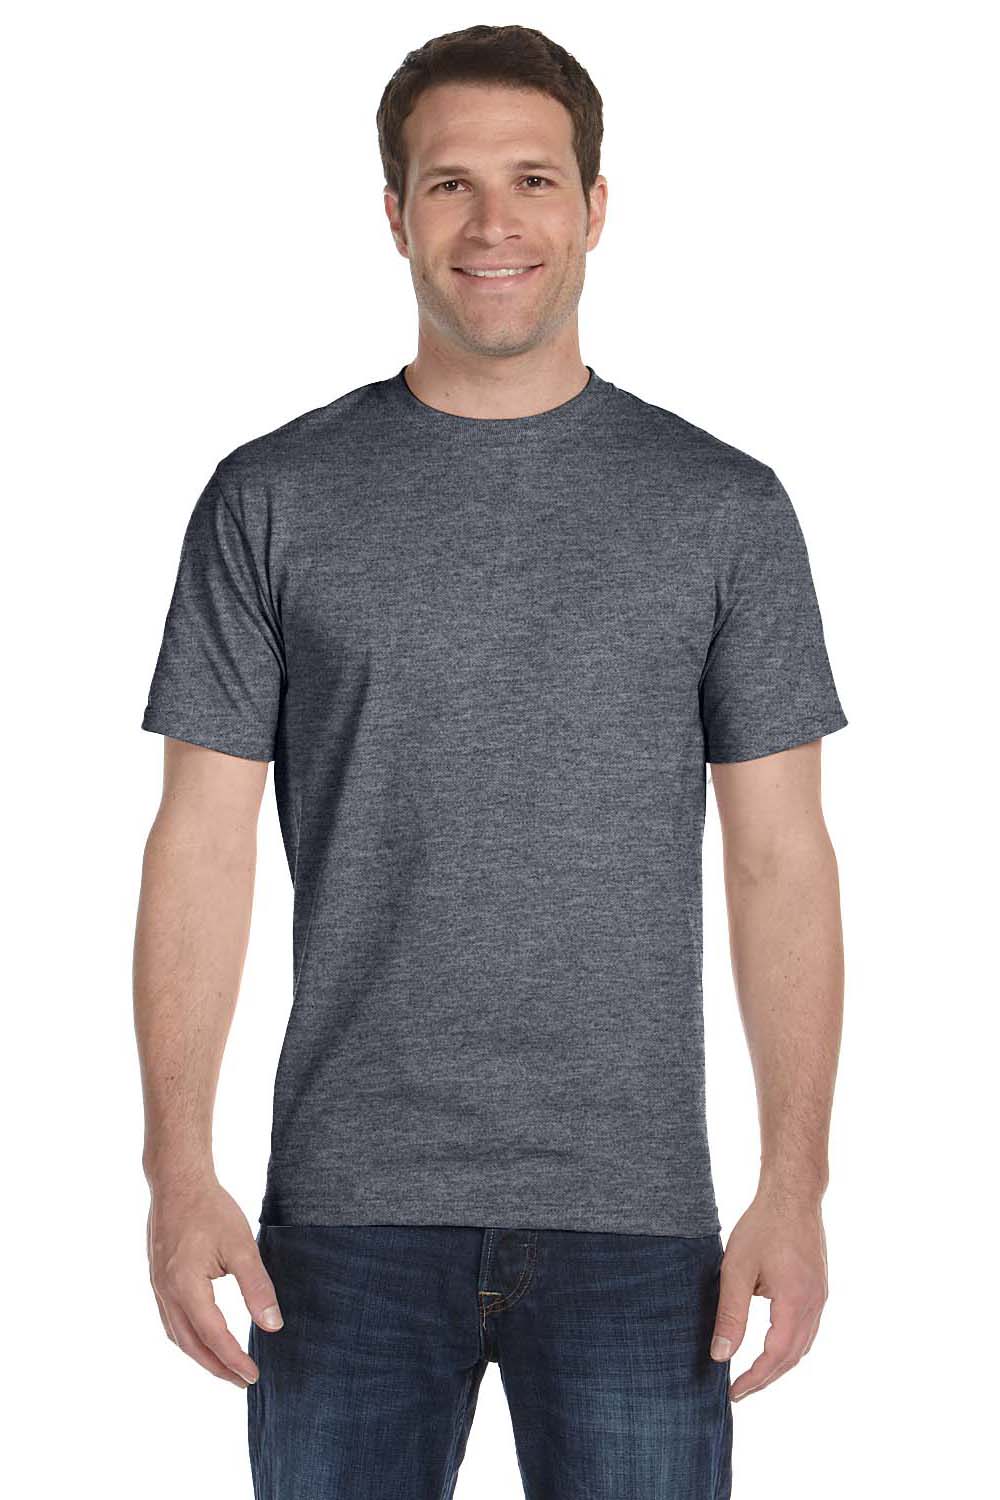 Hanes 5180 Mens Beefy-T Short Sleeve Crewneck T-Shirt Heather Charcoal Grey Front